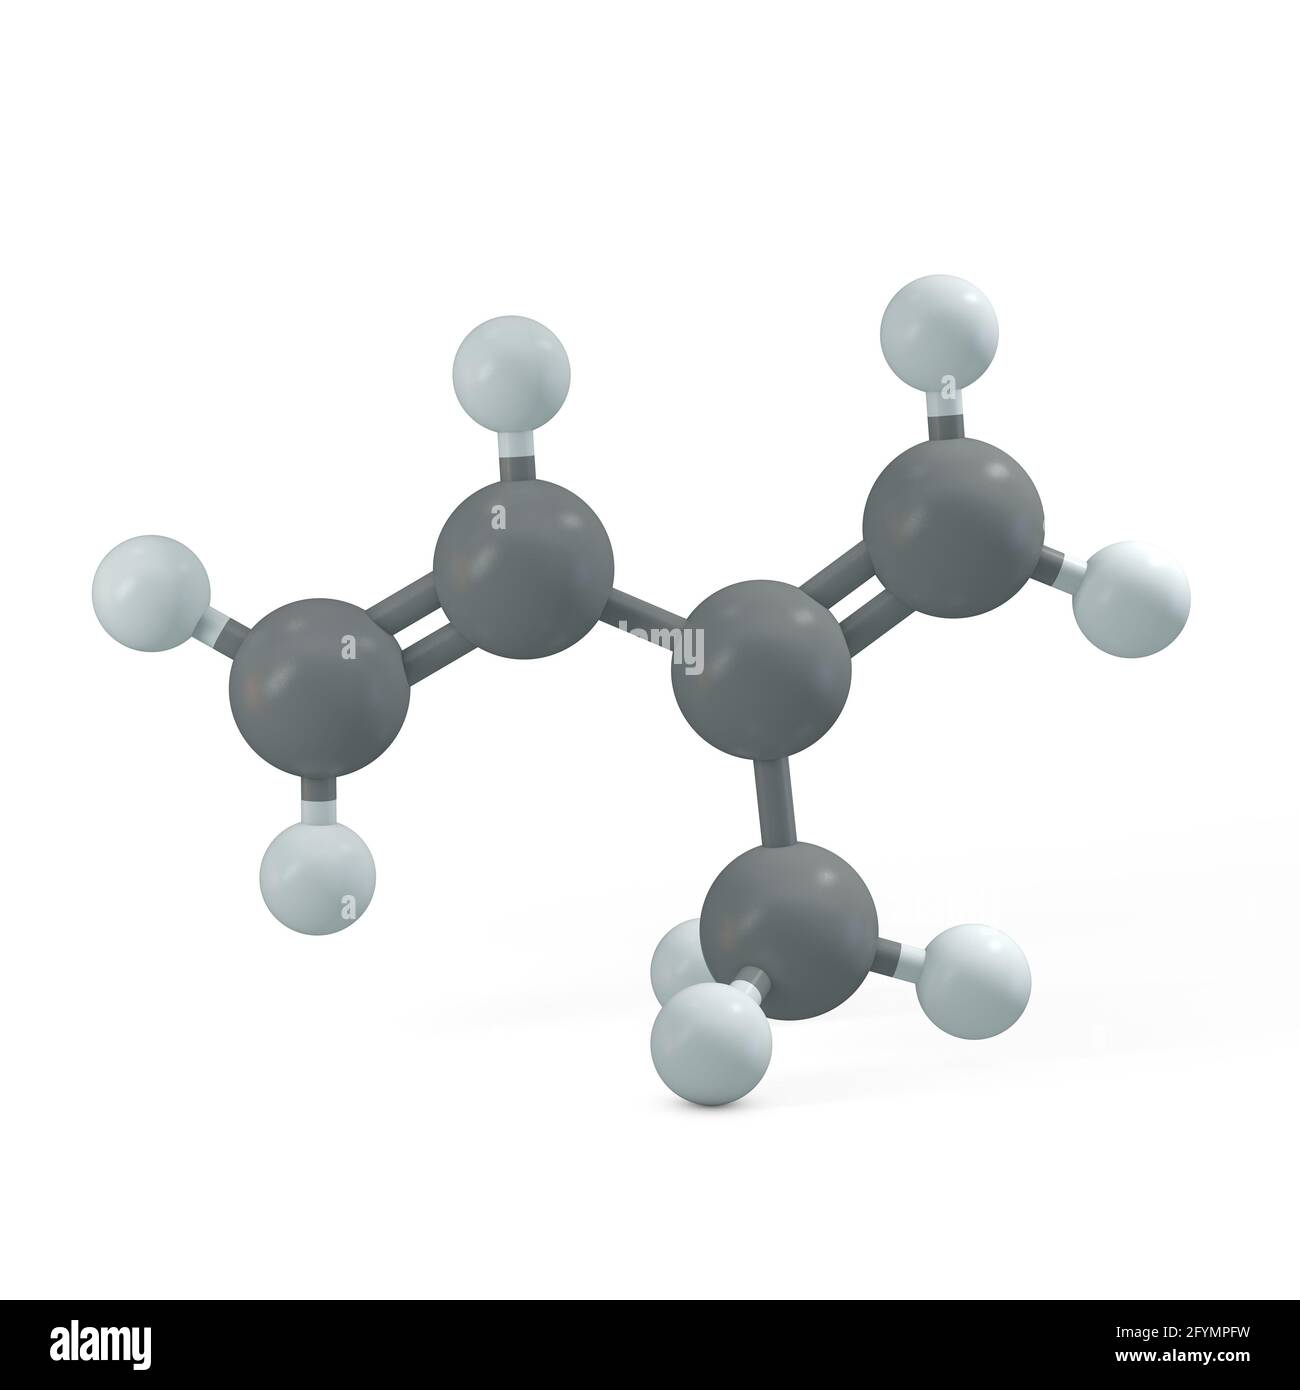 Rubber molecule, illustration Stock Photo